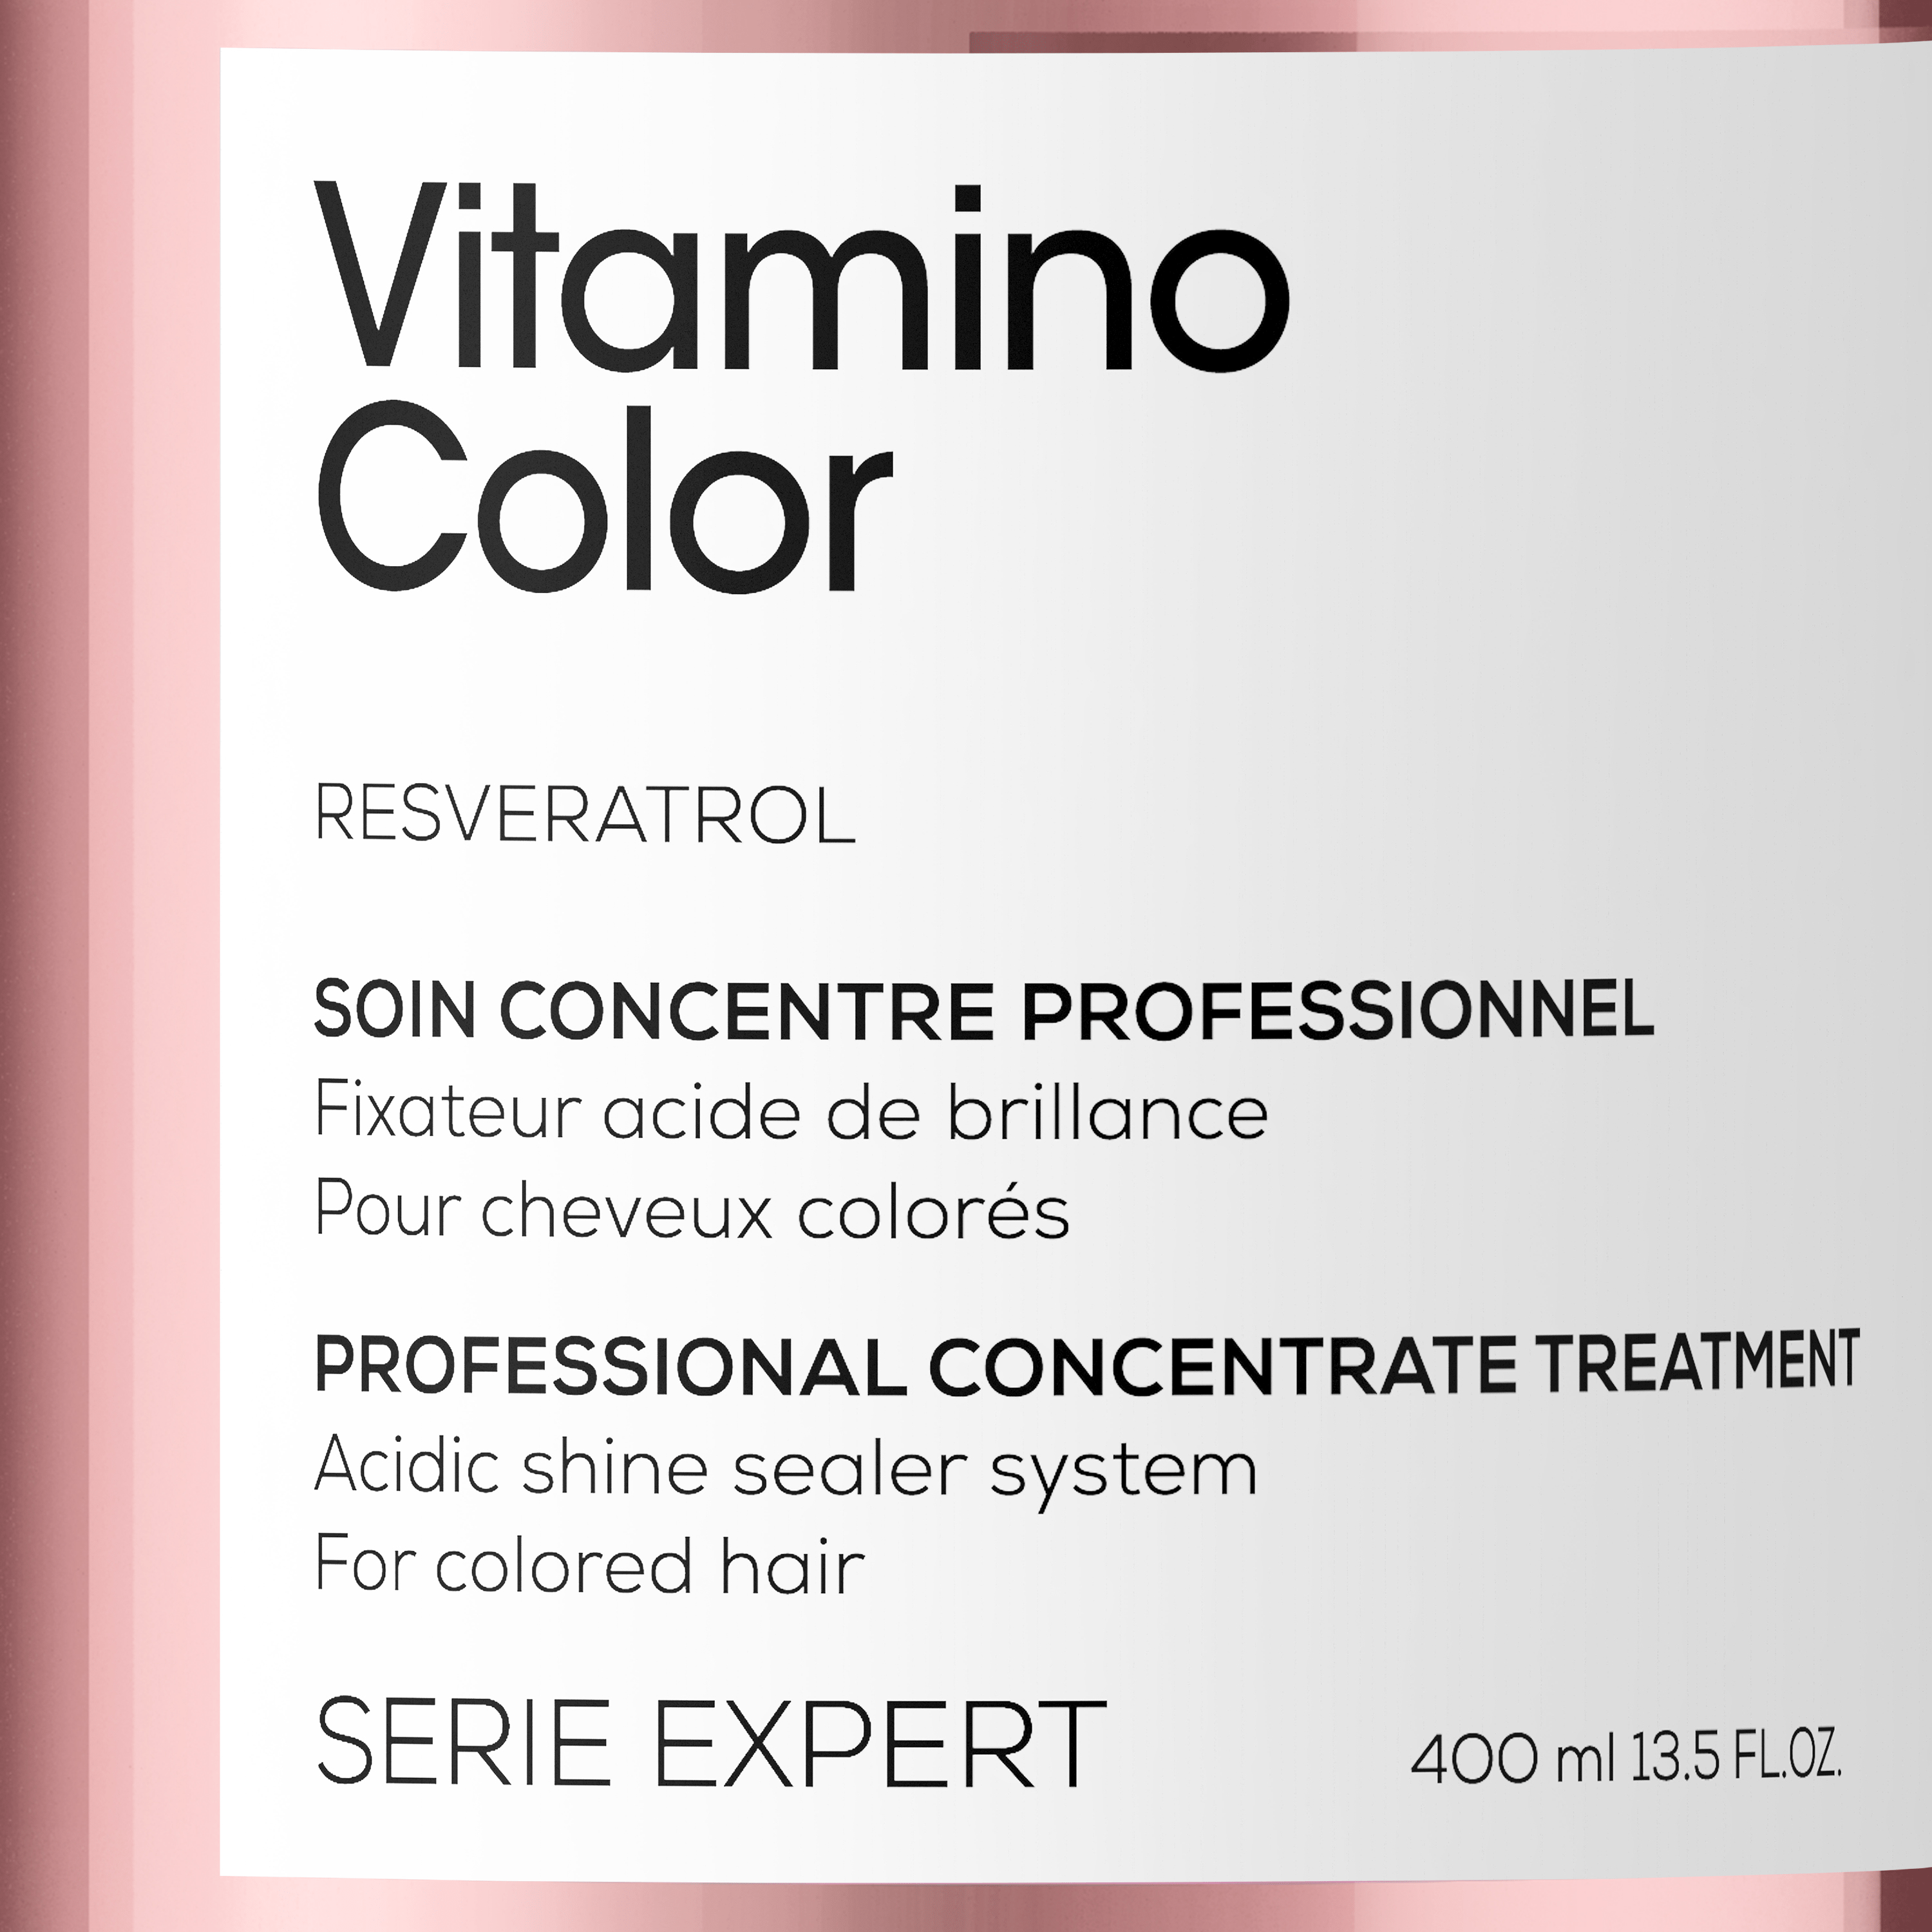 L'Oréal Professionnel Concentrado Vitamino Color 400ML Roberta Beauty Club